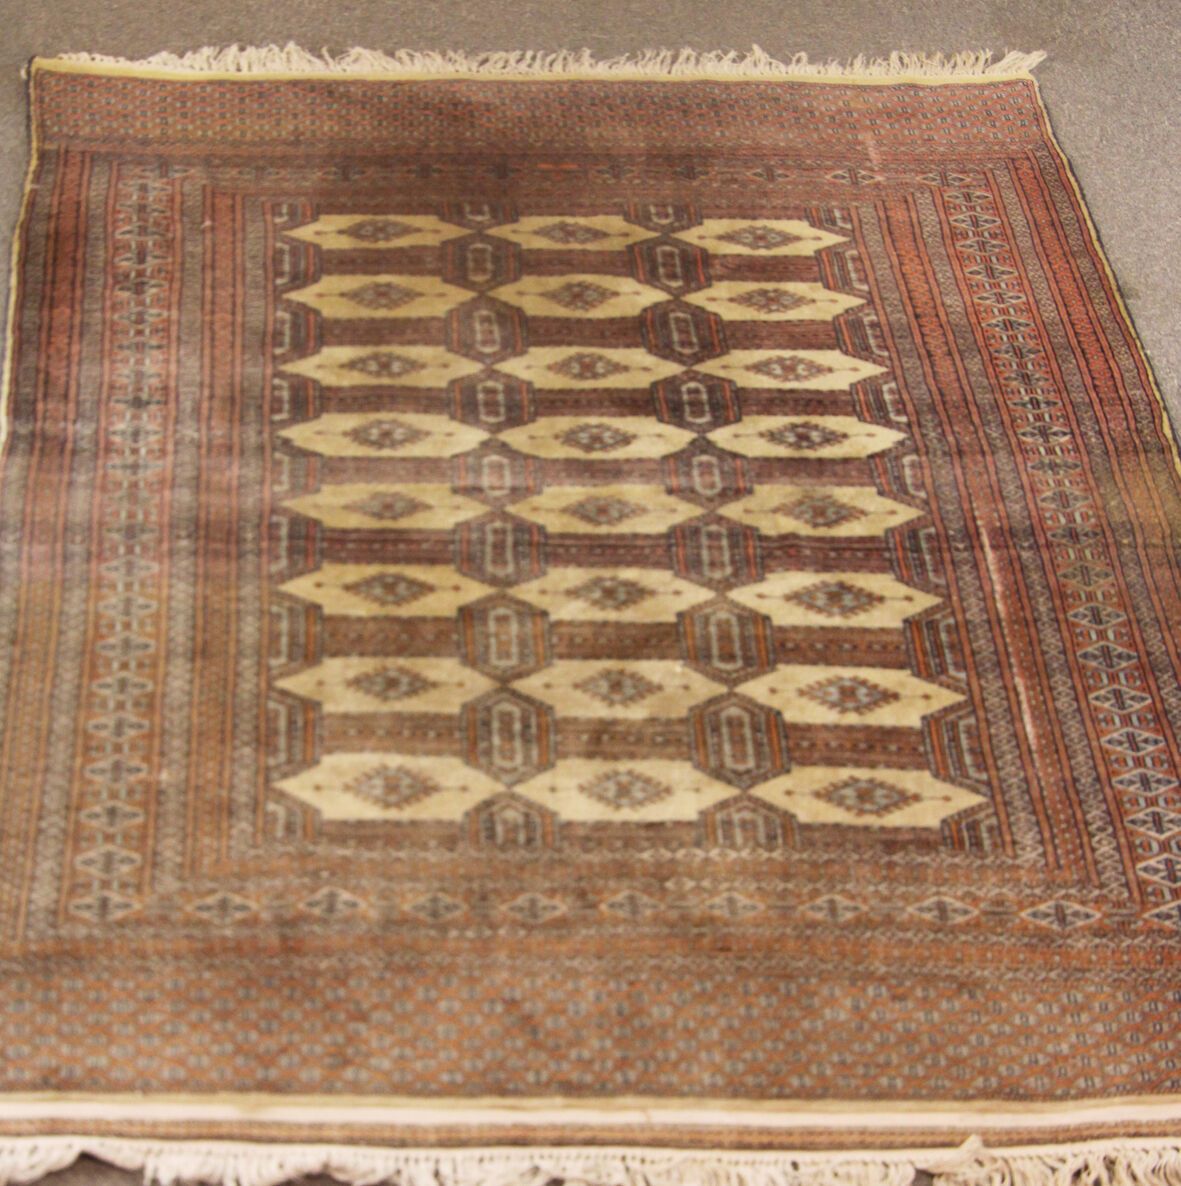 Null 巴基斯坦的地毯，有奖章装饰。200 x 150厘米

因使用而磨损